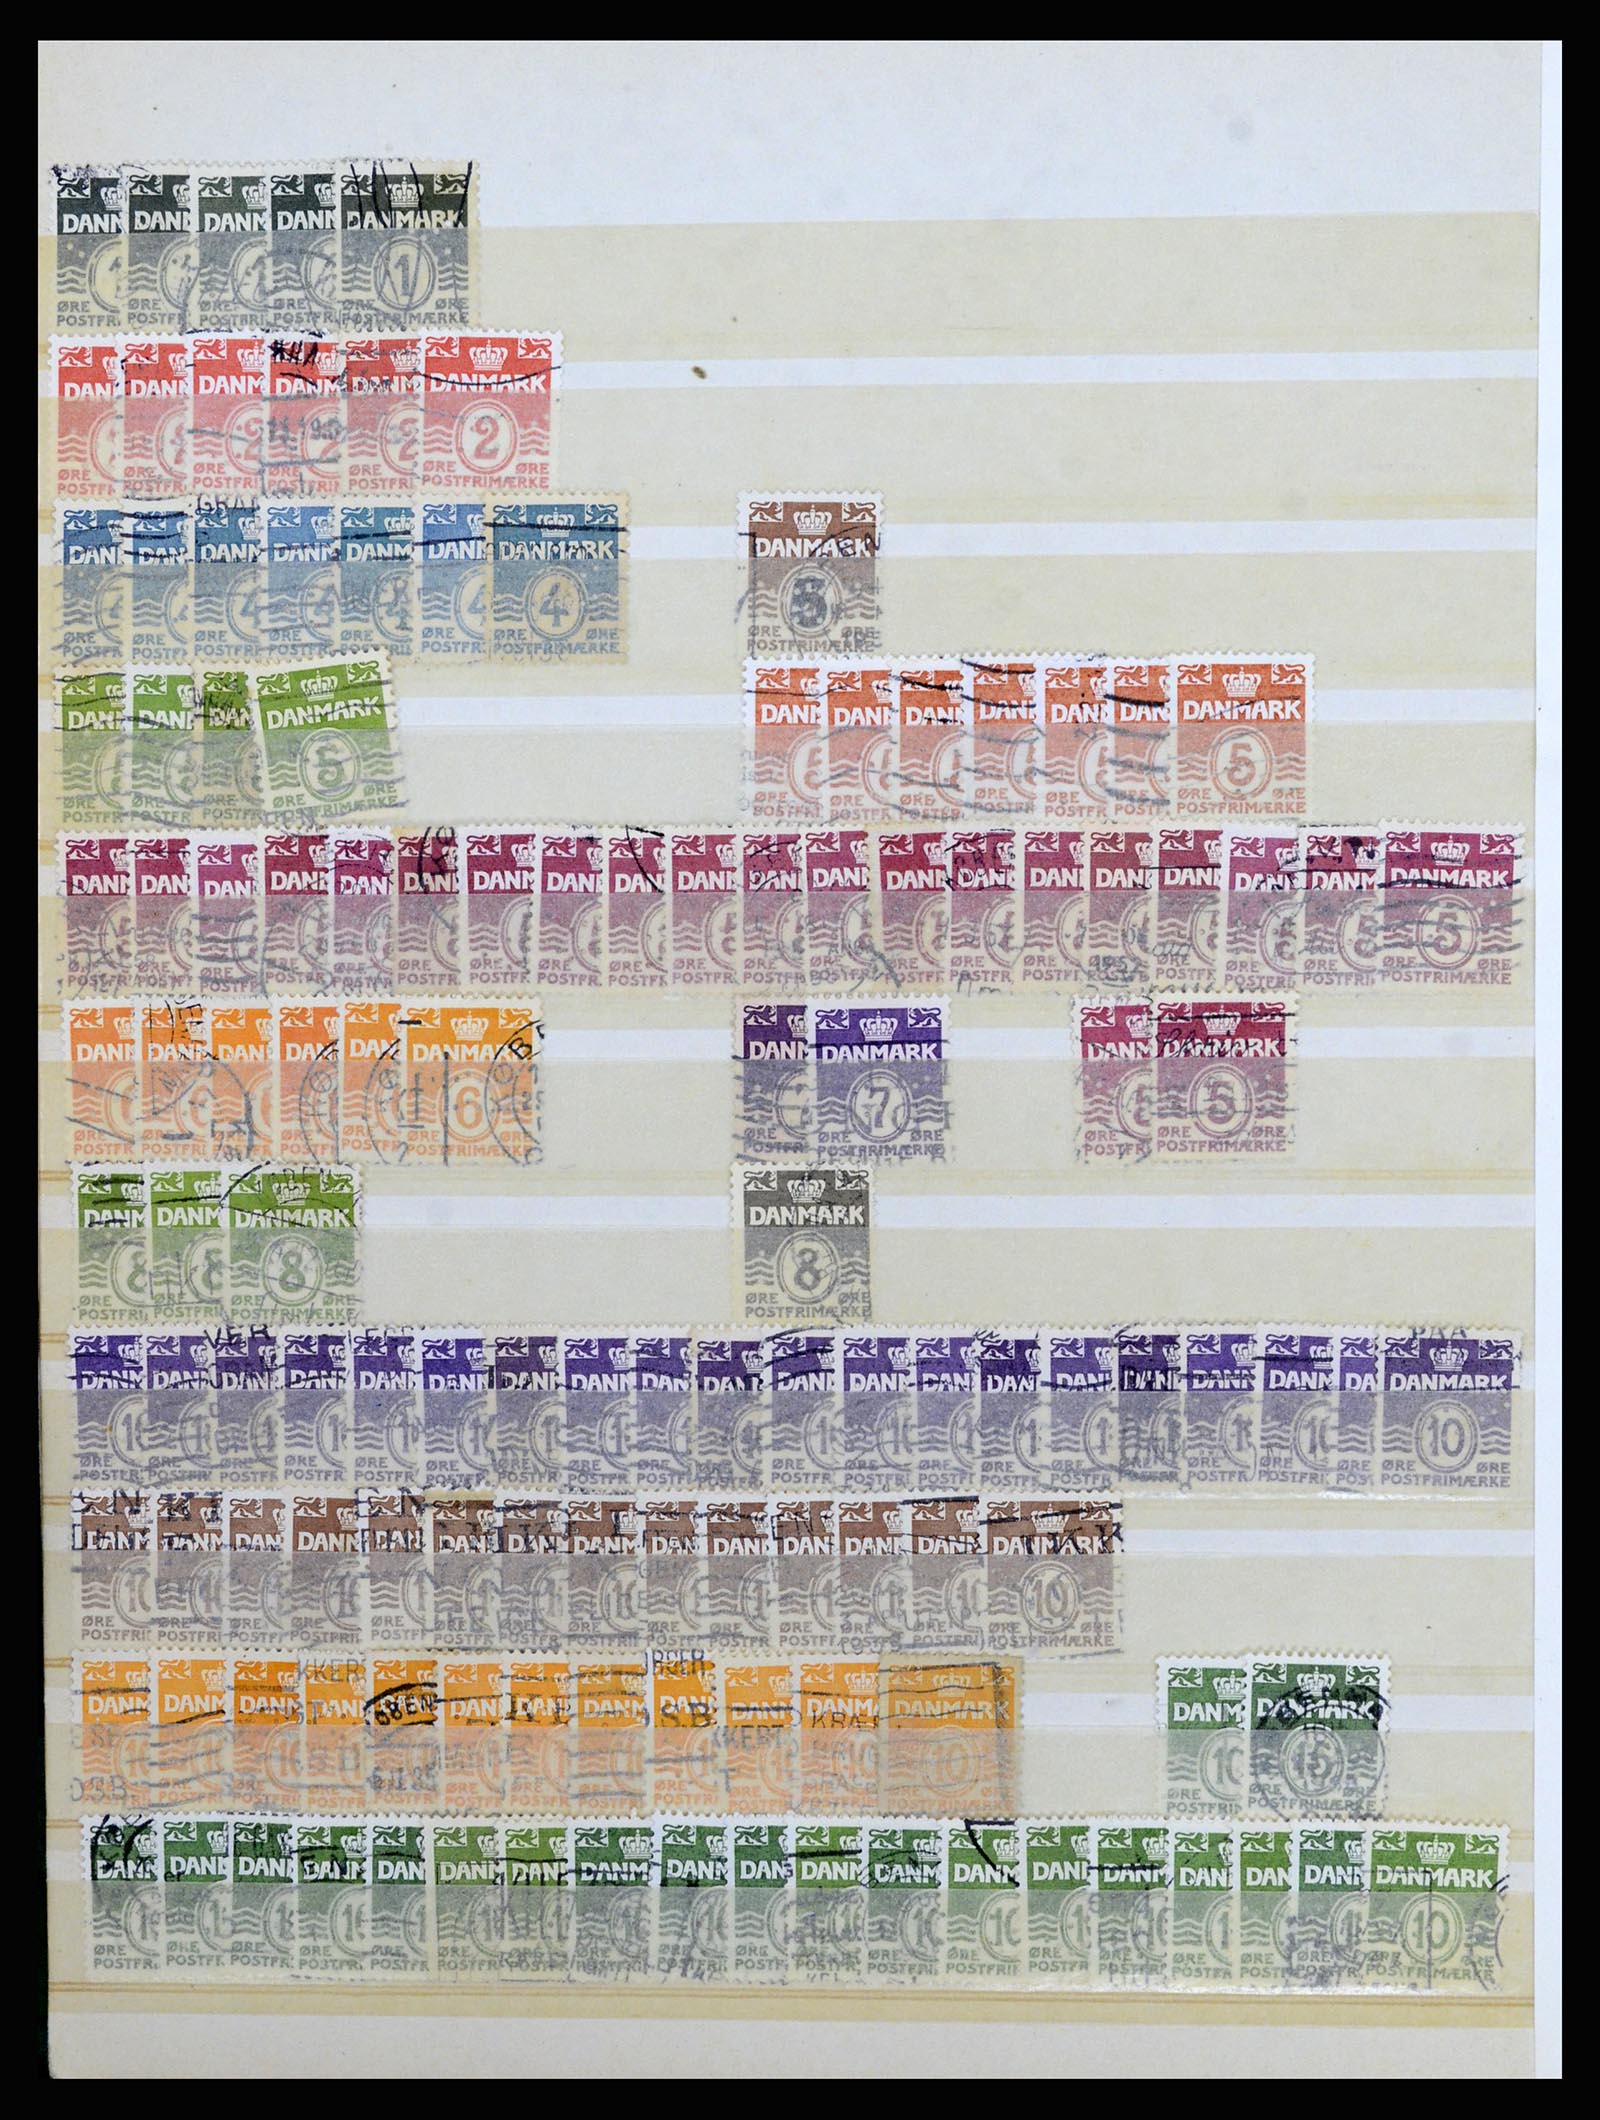 37056 029 - Stamp collection 37056 Denmark perfins.